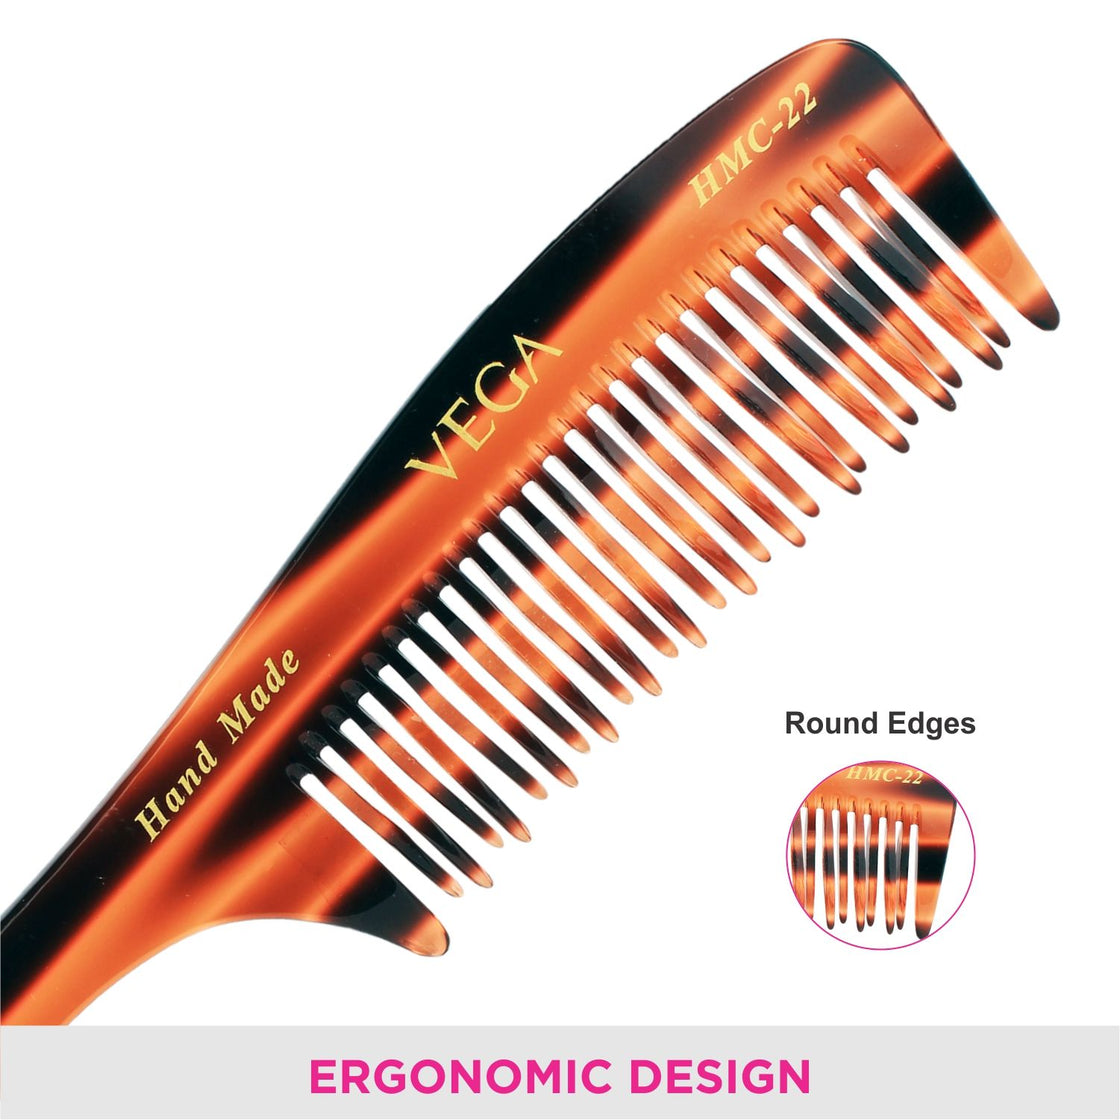 Vega Handcrafted Comb (Hmc-22)-2